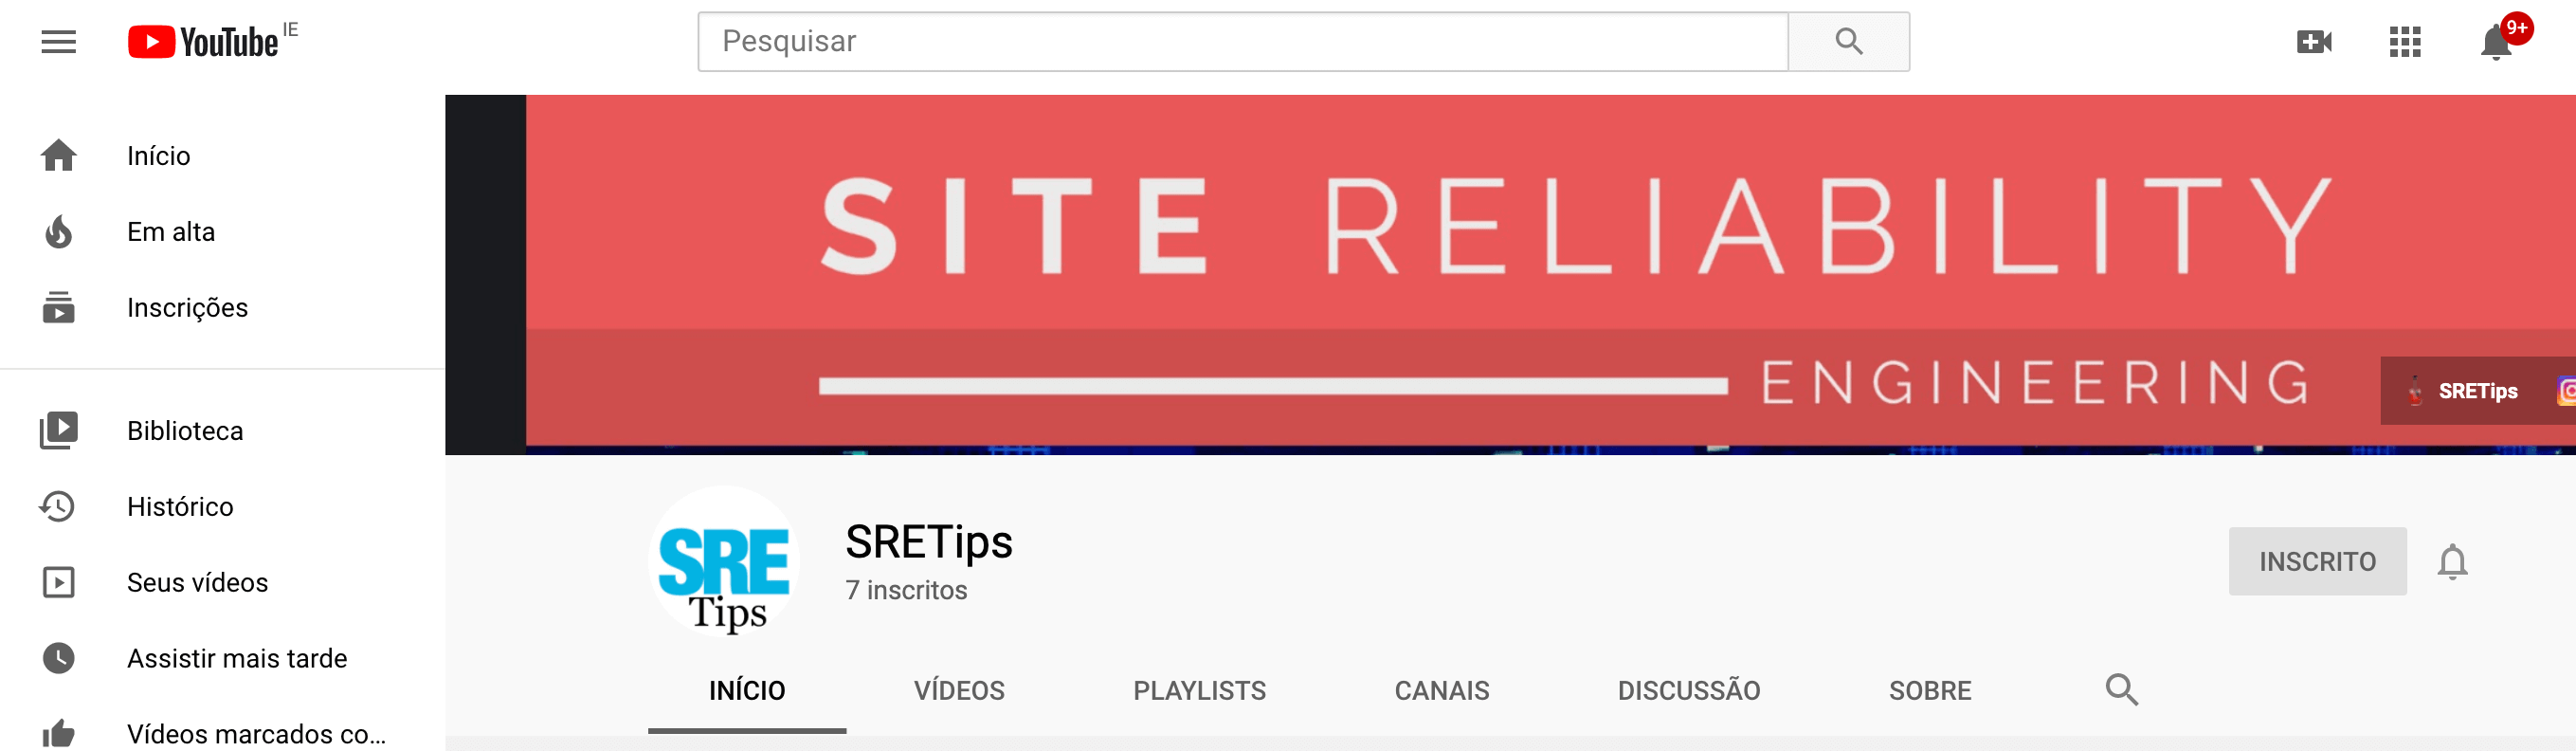 SRE Tips Youtube Channel